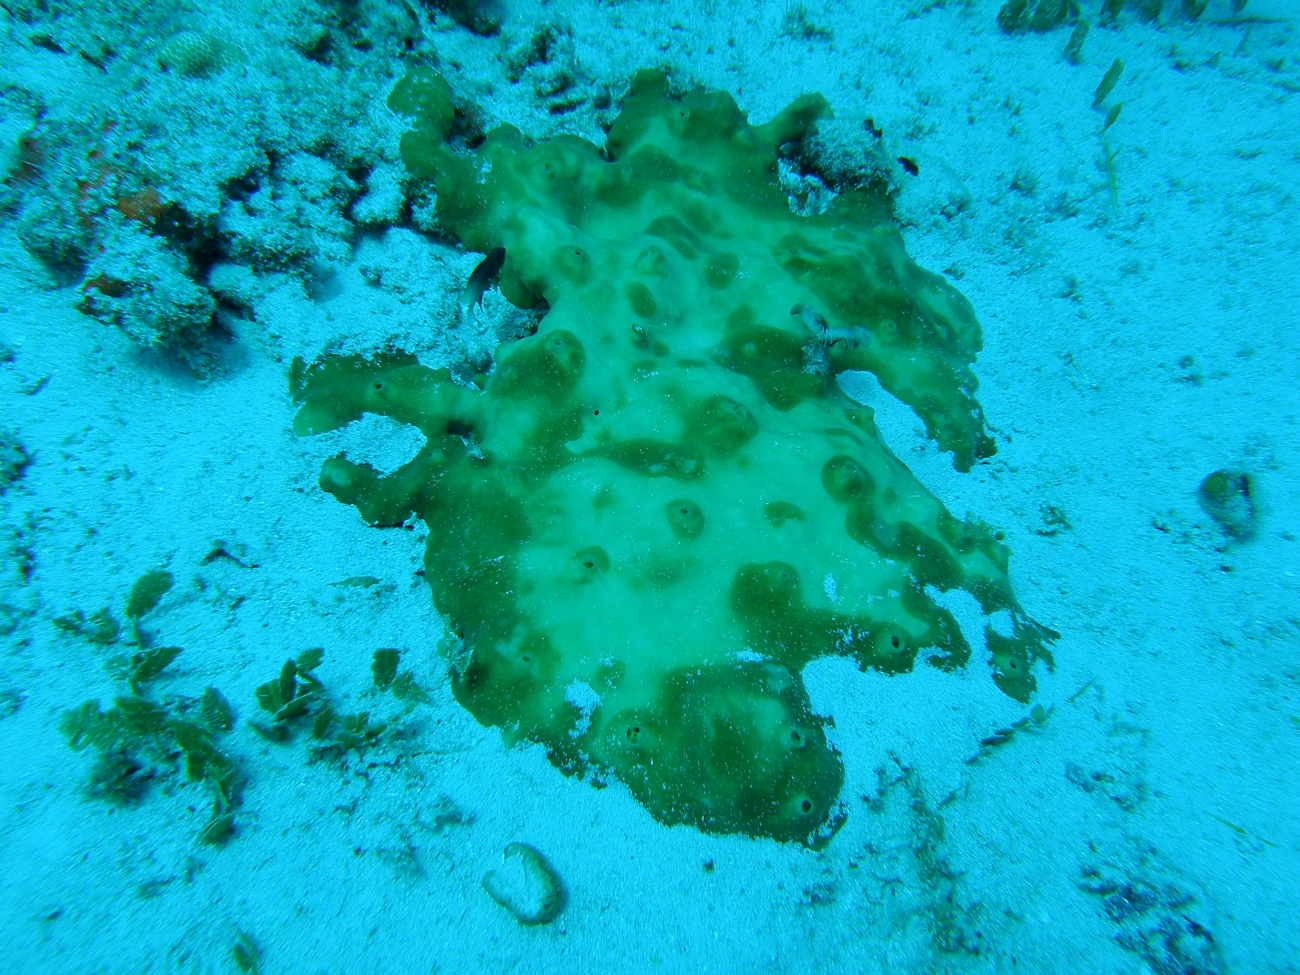 Caulerpa algae and a green encrusting sponge (Porifera sp